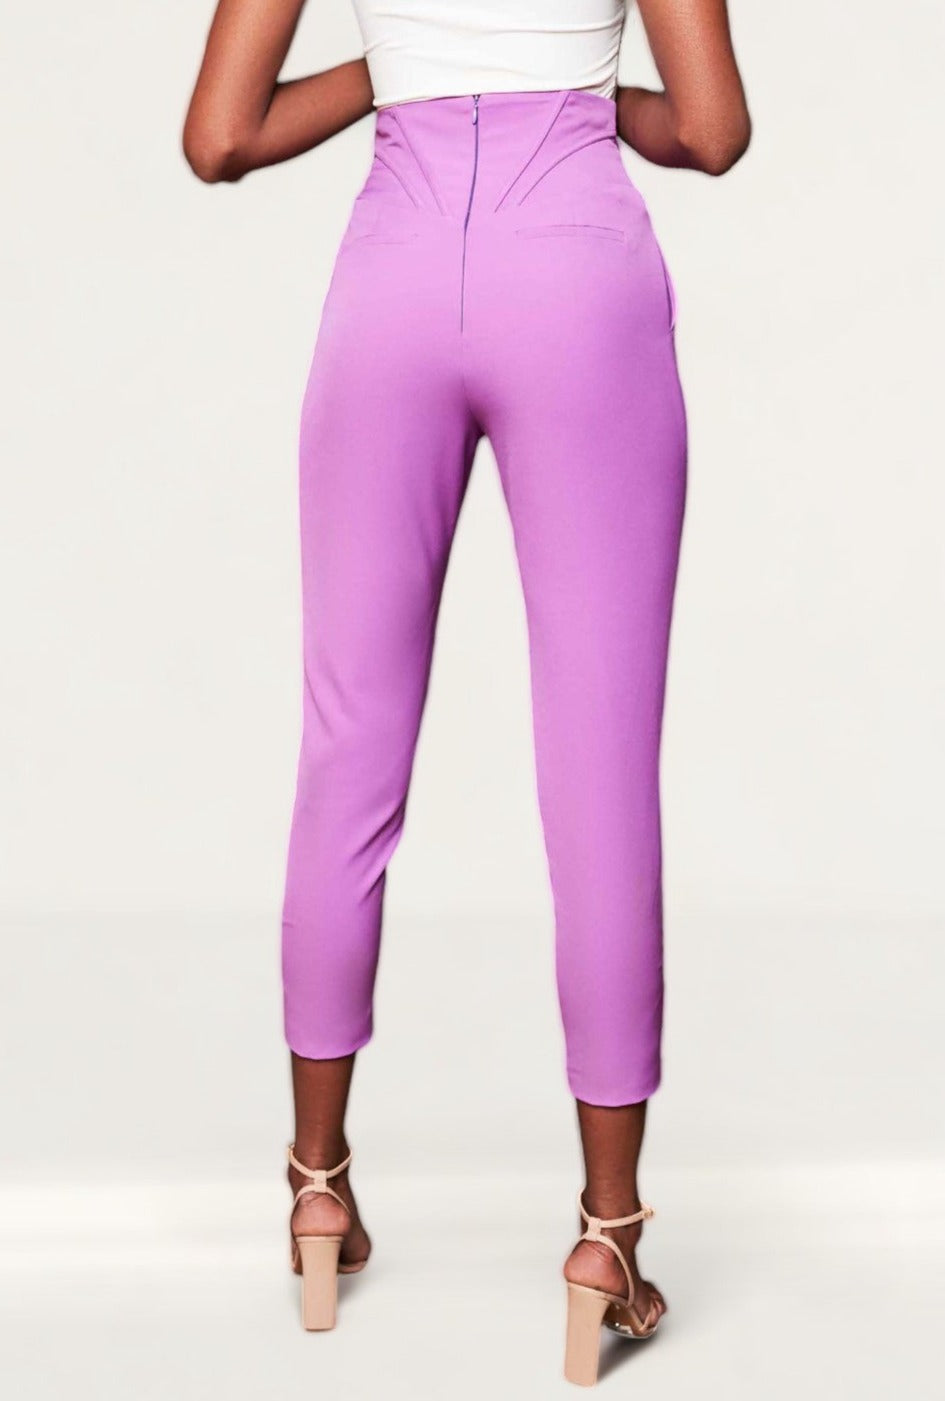 Lavish Alice Purple Balloon Sleeve Blazer And Corset Waist Trousers product image